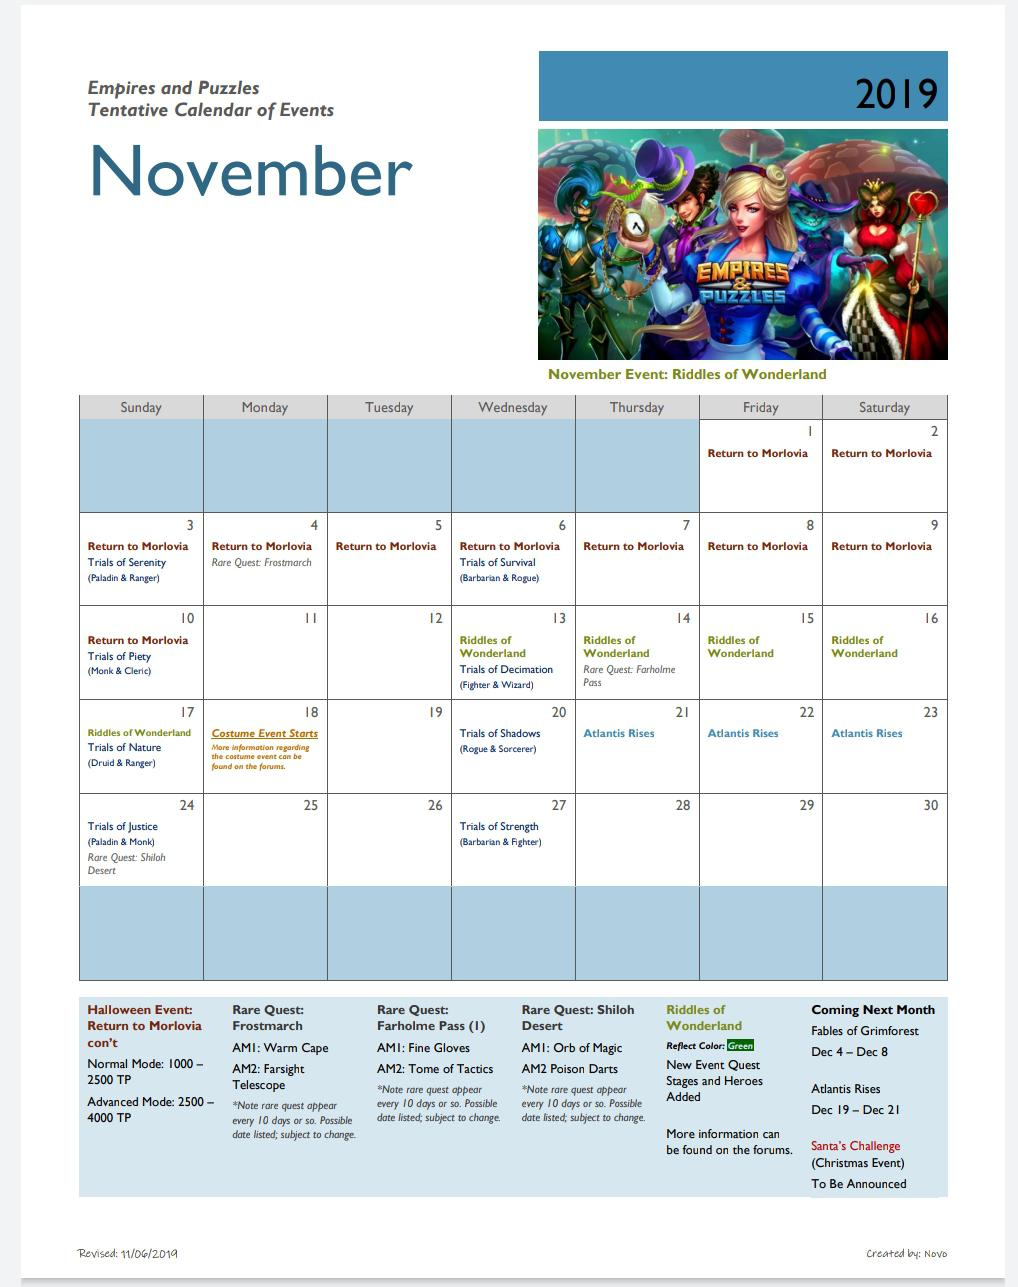 Upated November Calendar : Empiresandpuzzles regarding Empires And Puzzles Calendar